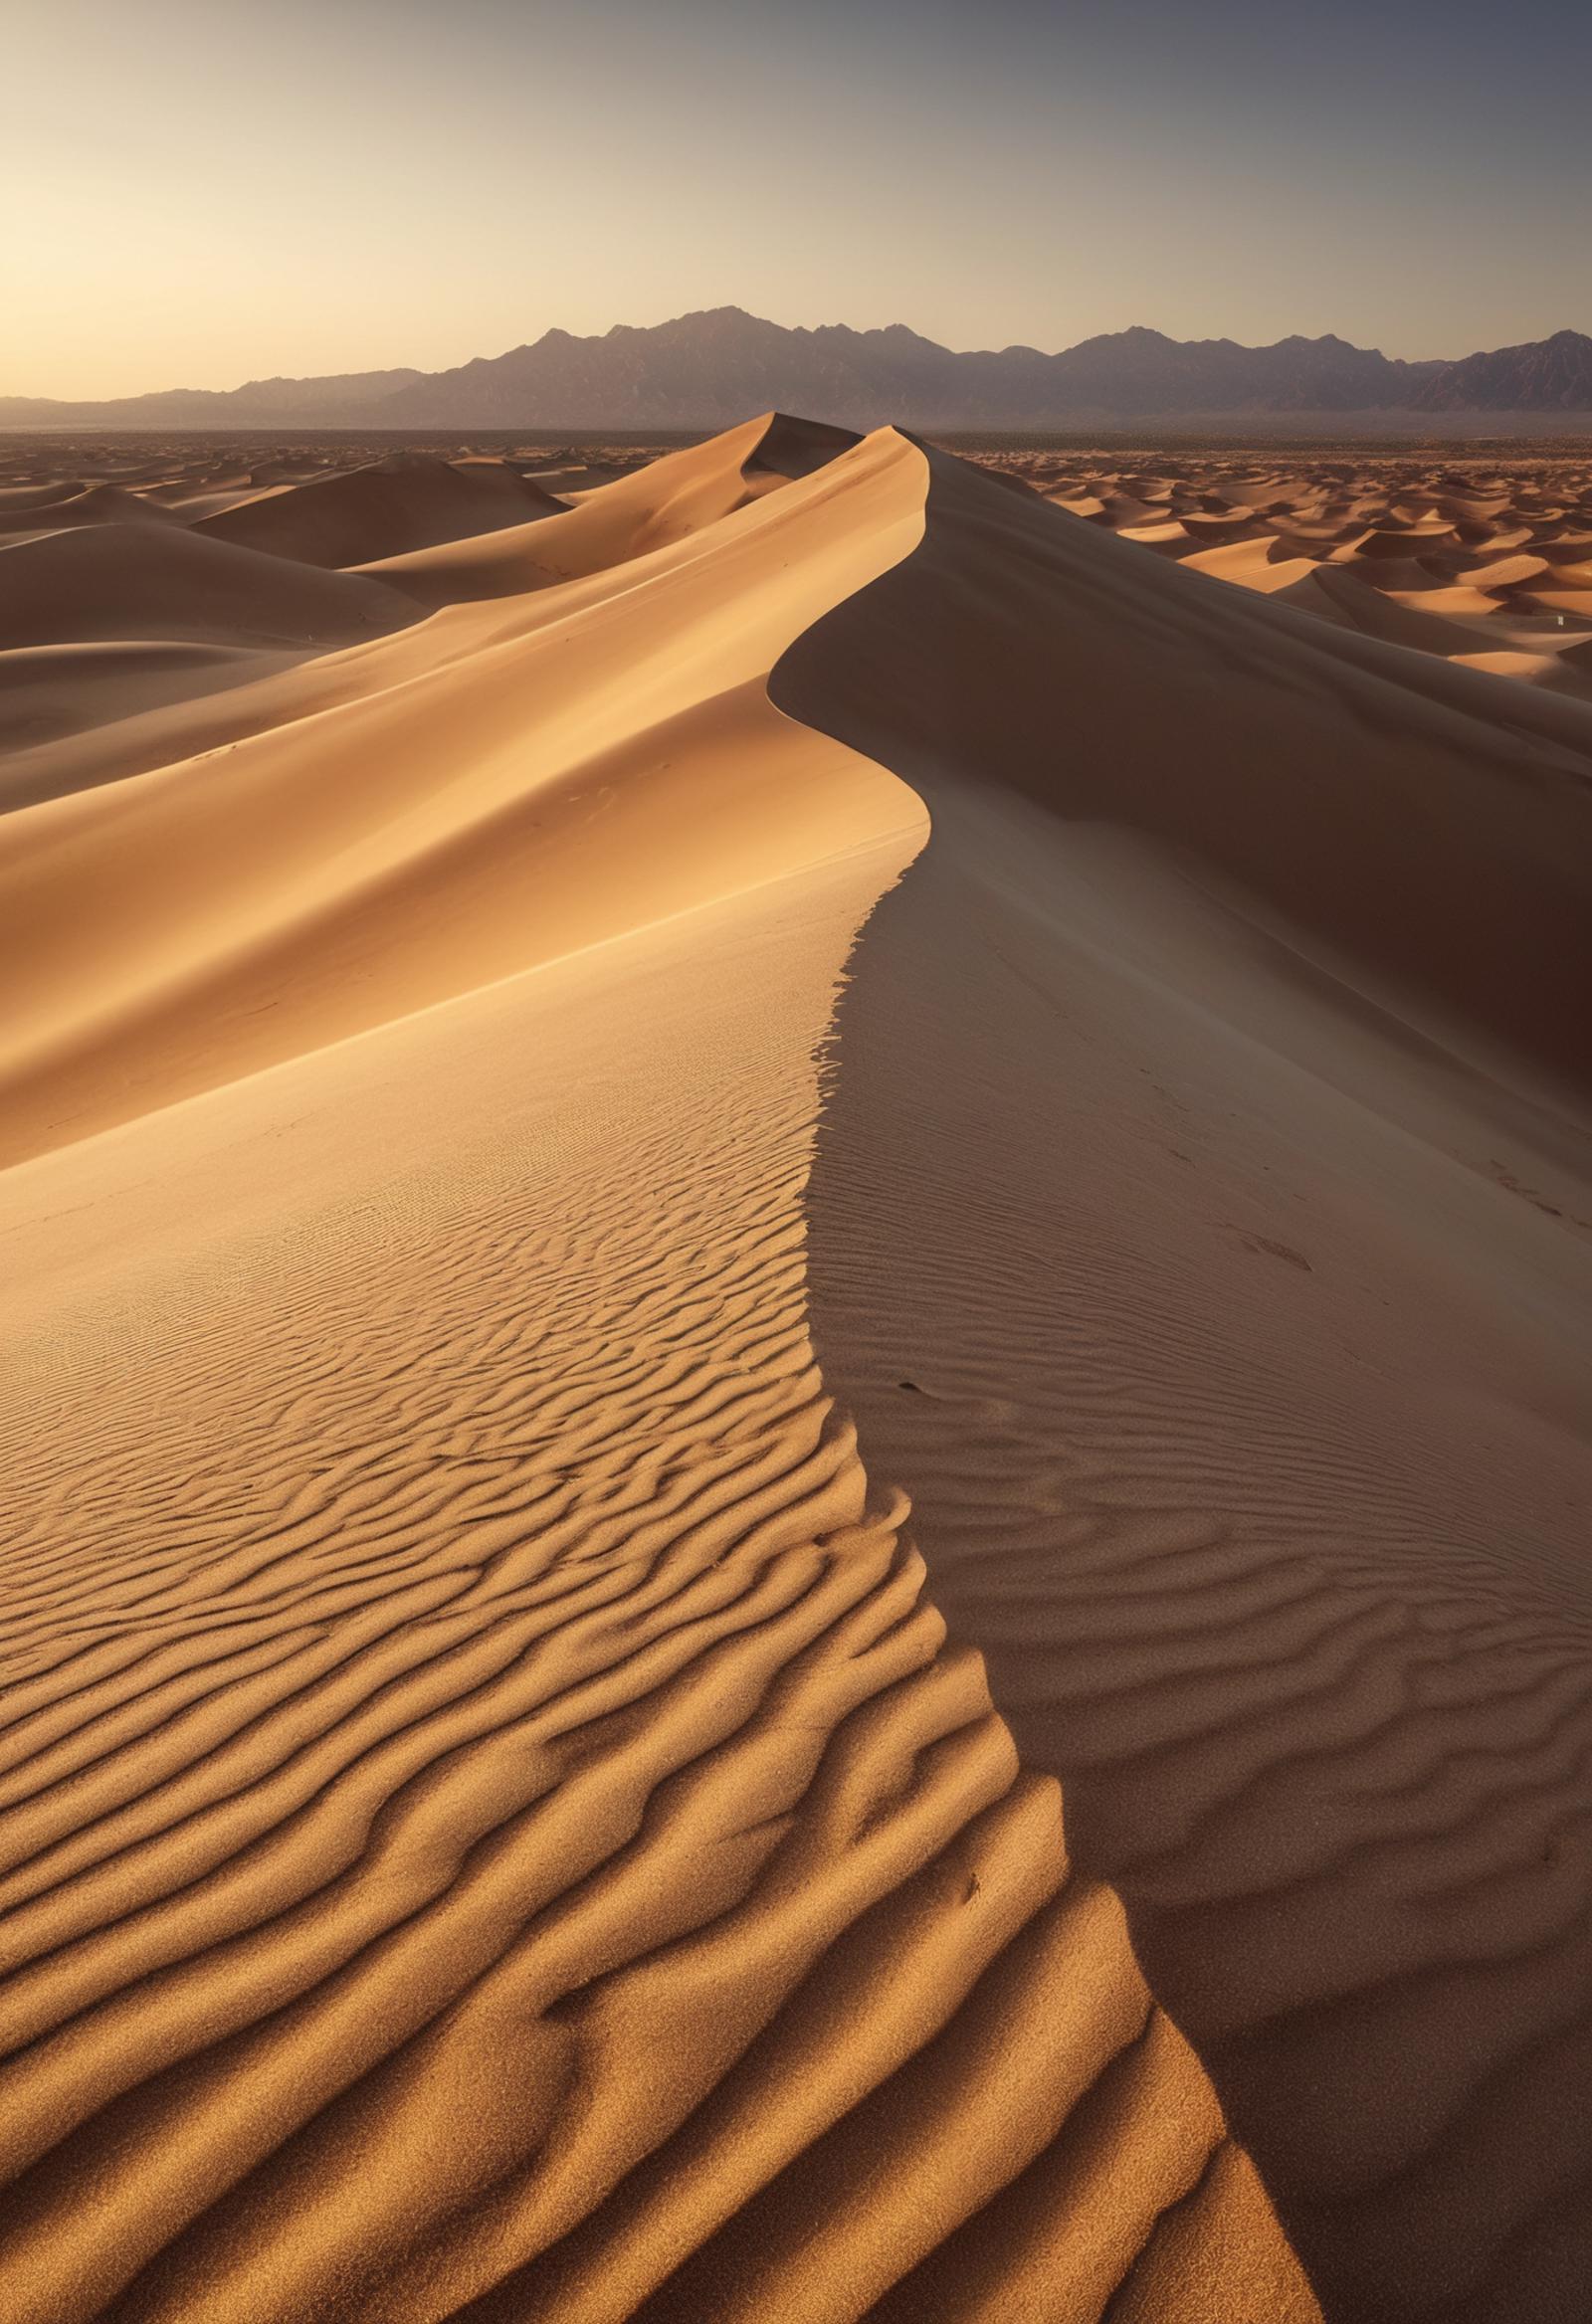 Wavy Sand Dunes in a Desert Landscape